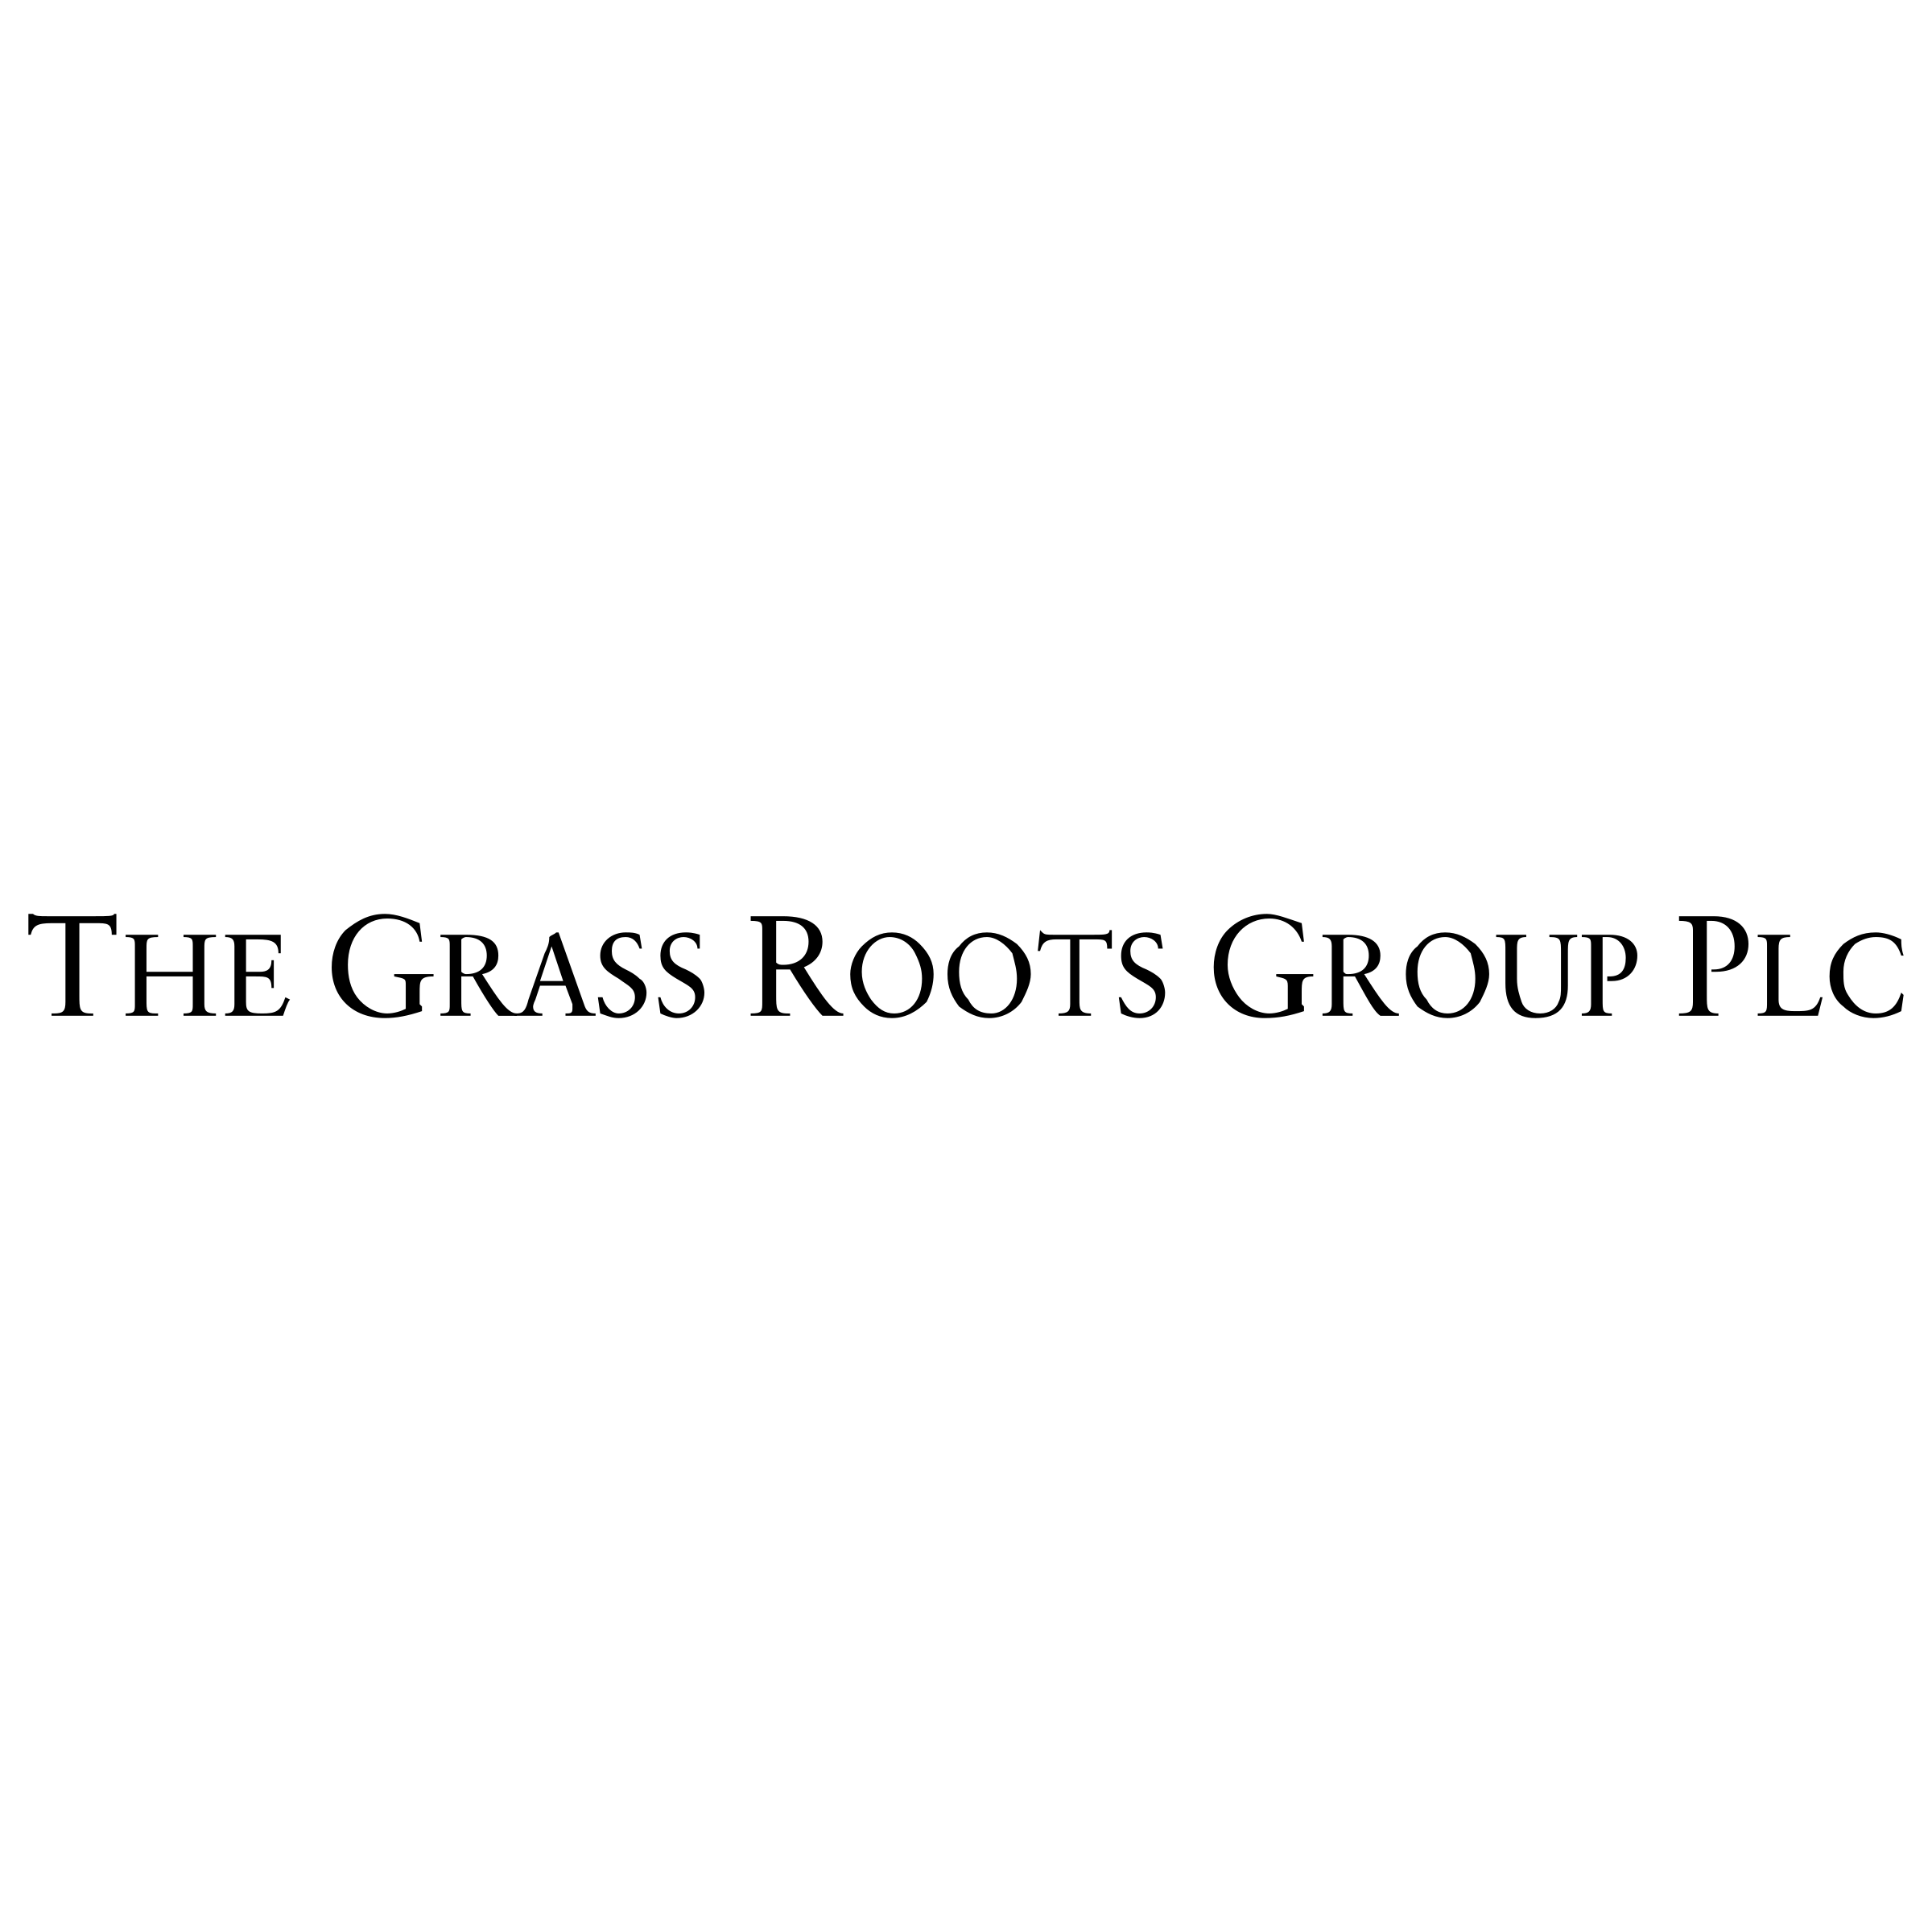 Black Grass Logo - The Grass Roots Group Logo PNG Transparent & SVG Vector